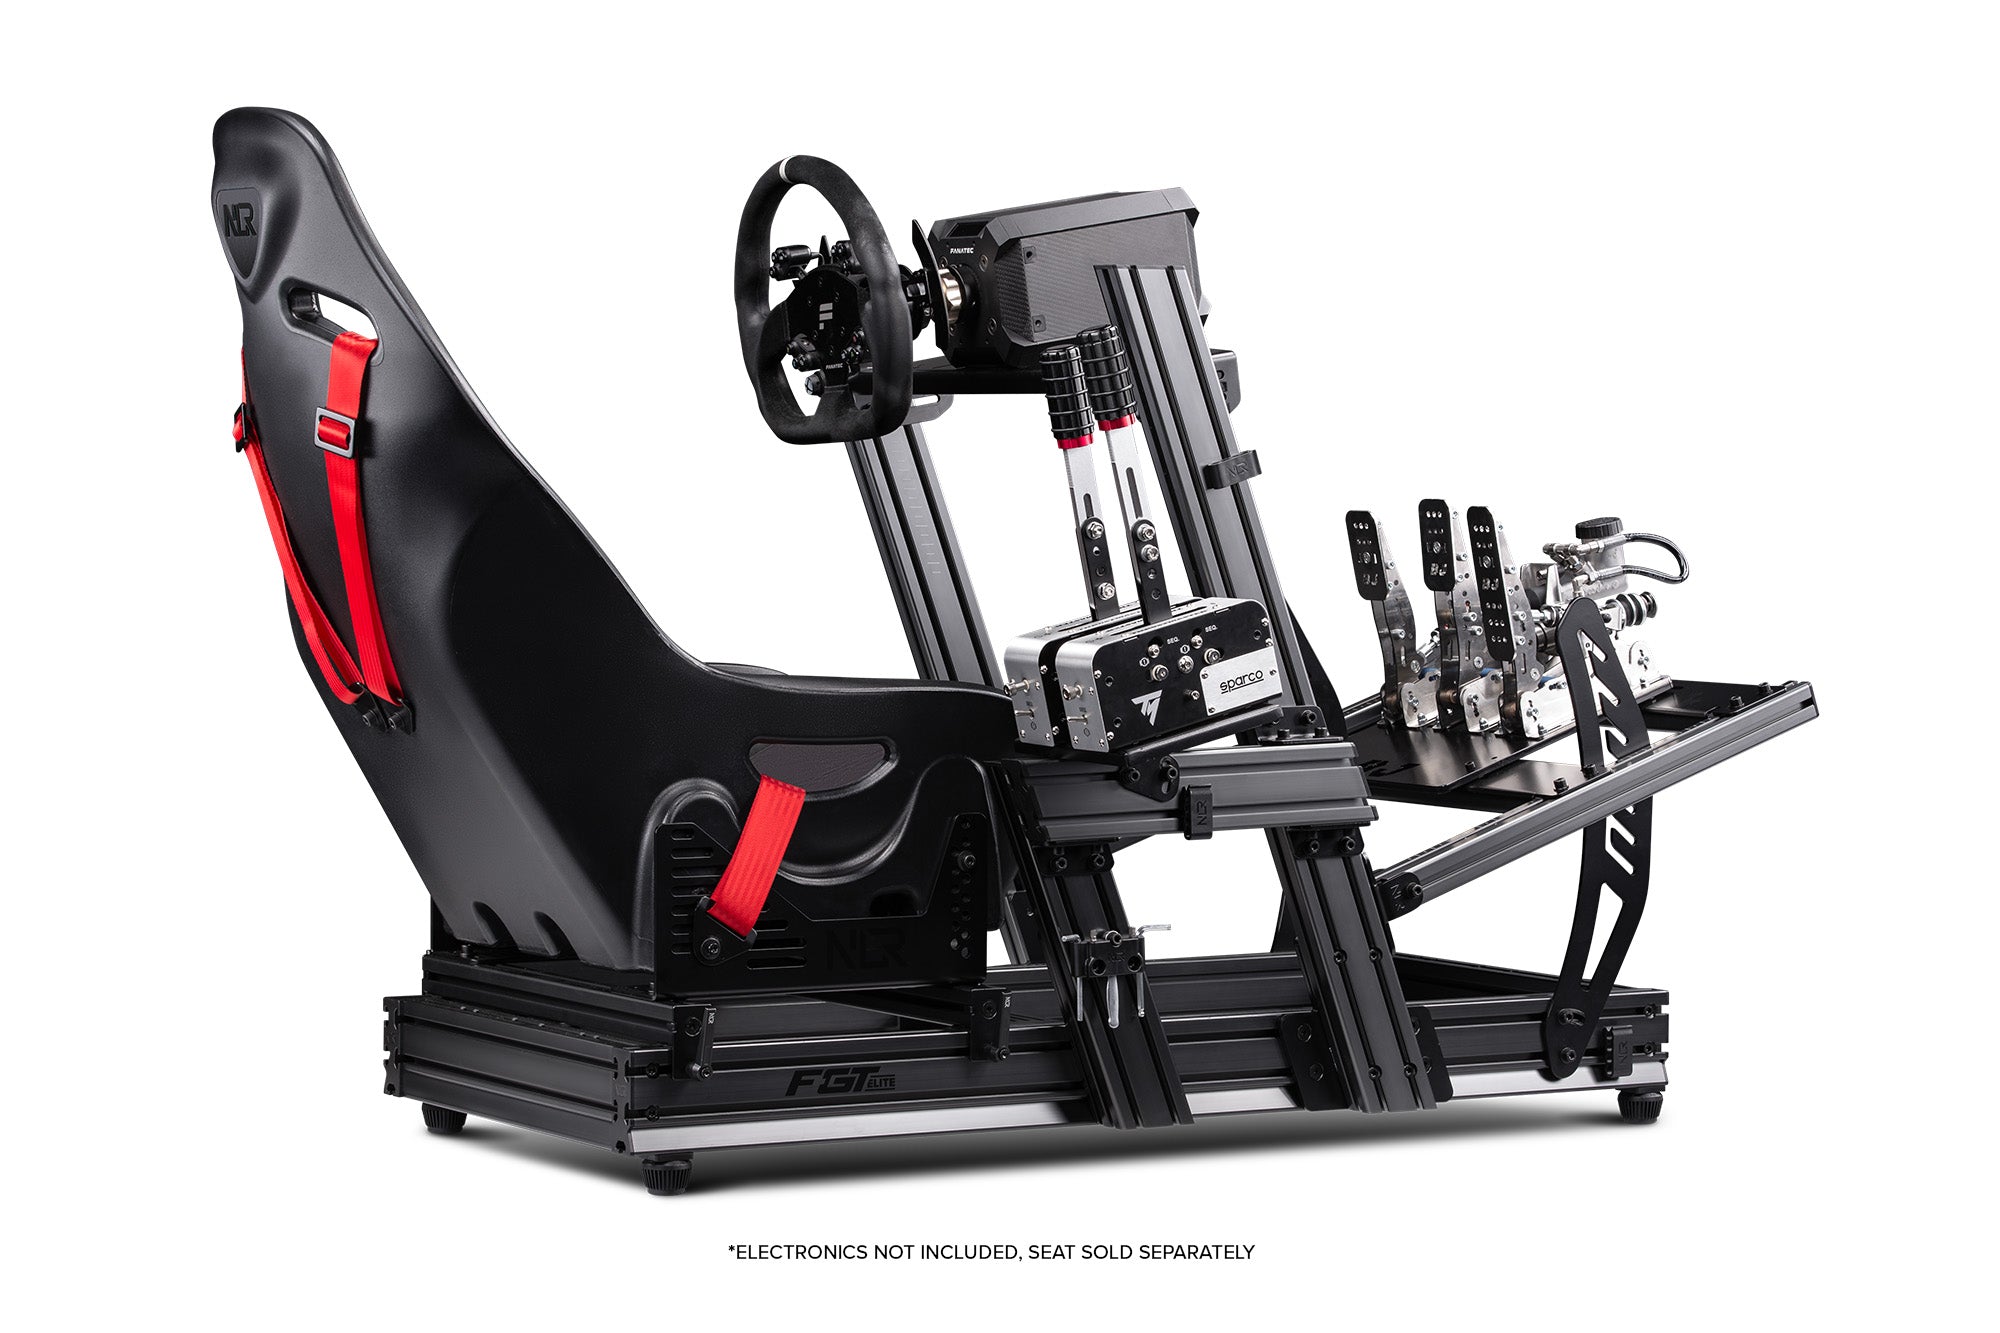 Next Level Racing GTTrack Simulator Cockpit (NLR-S009)